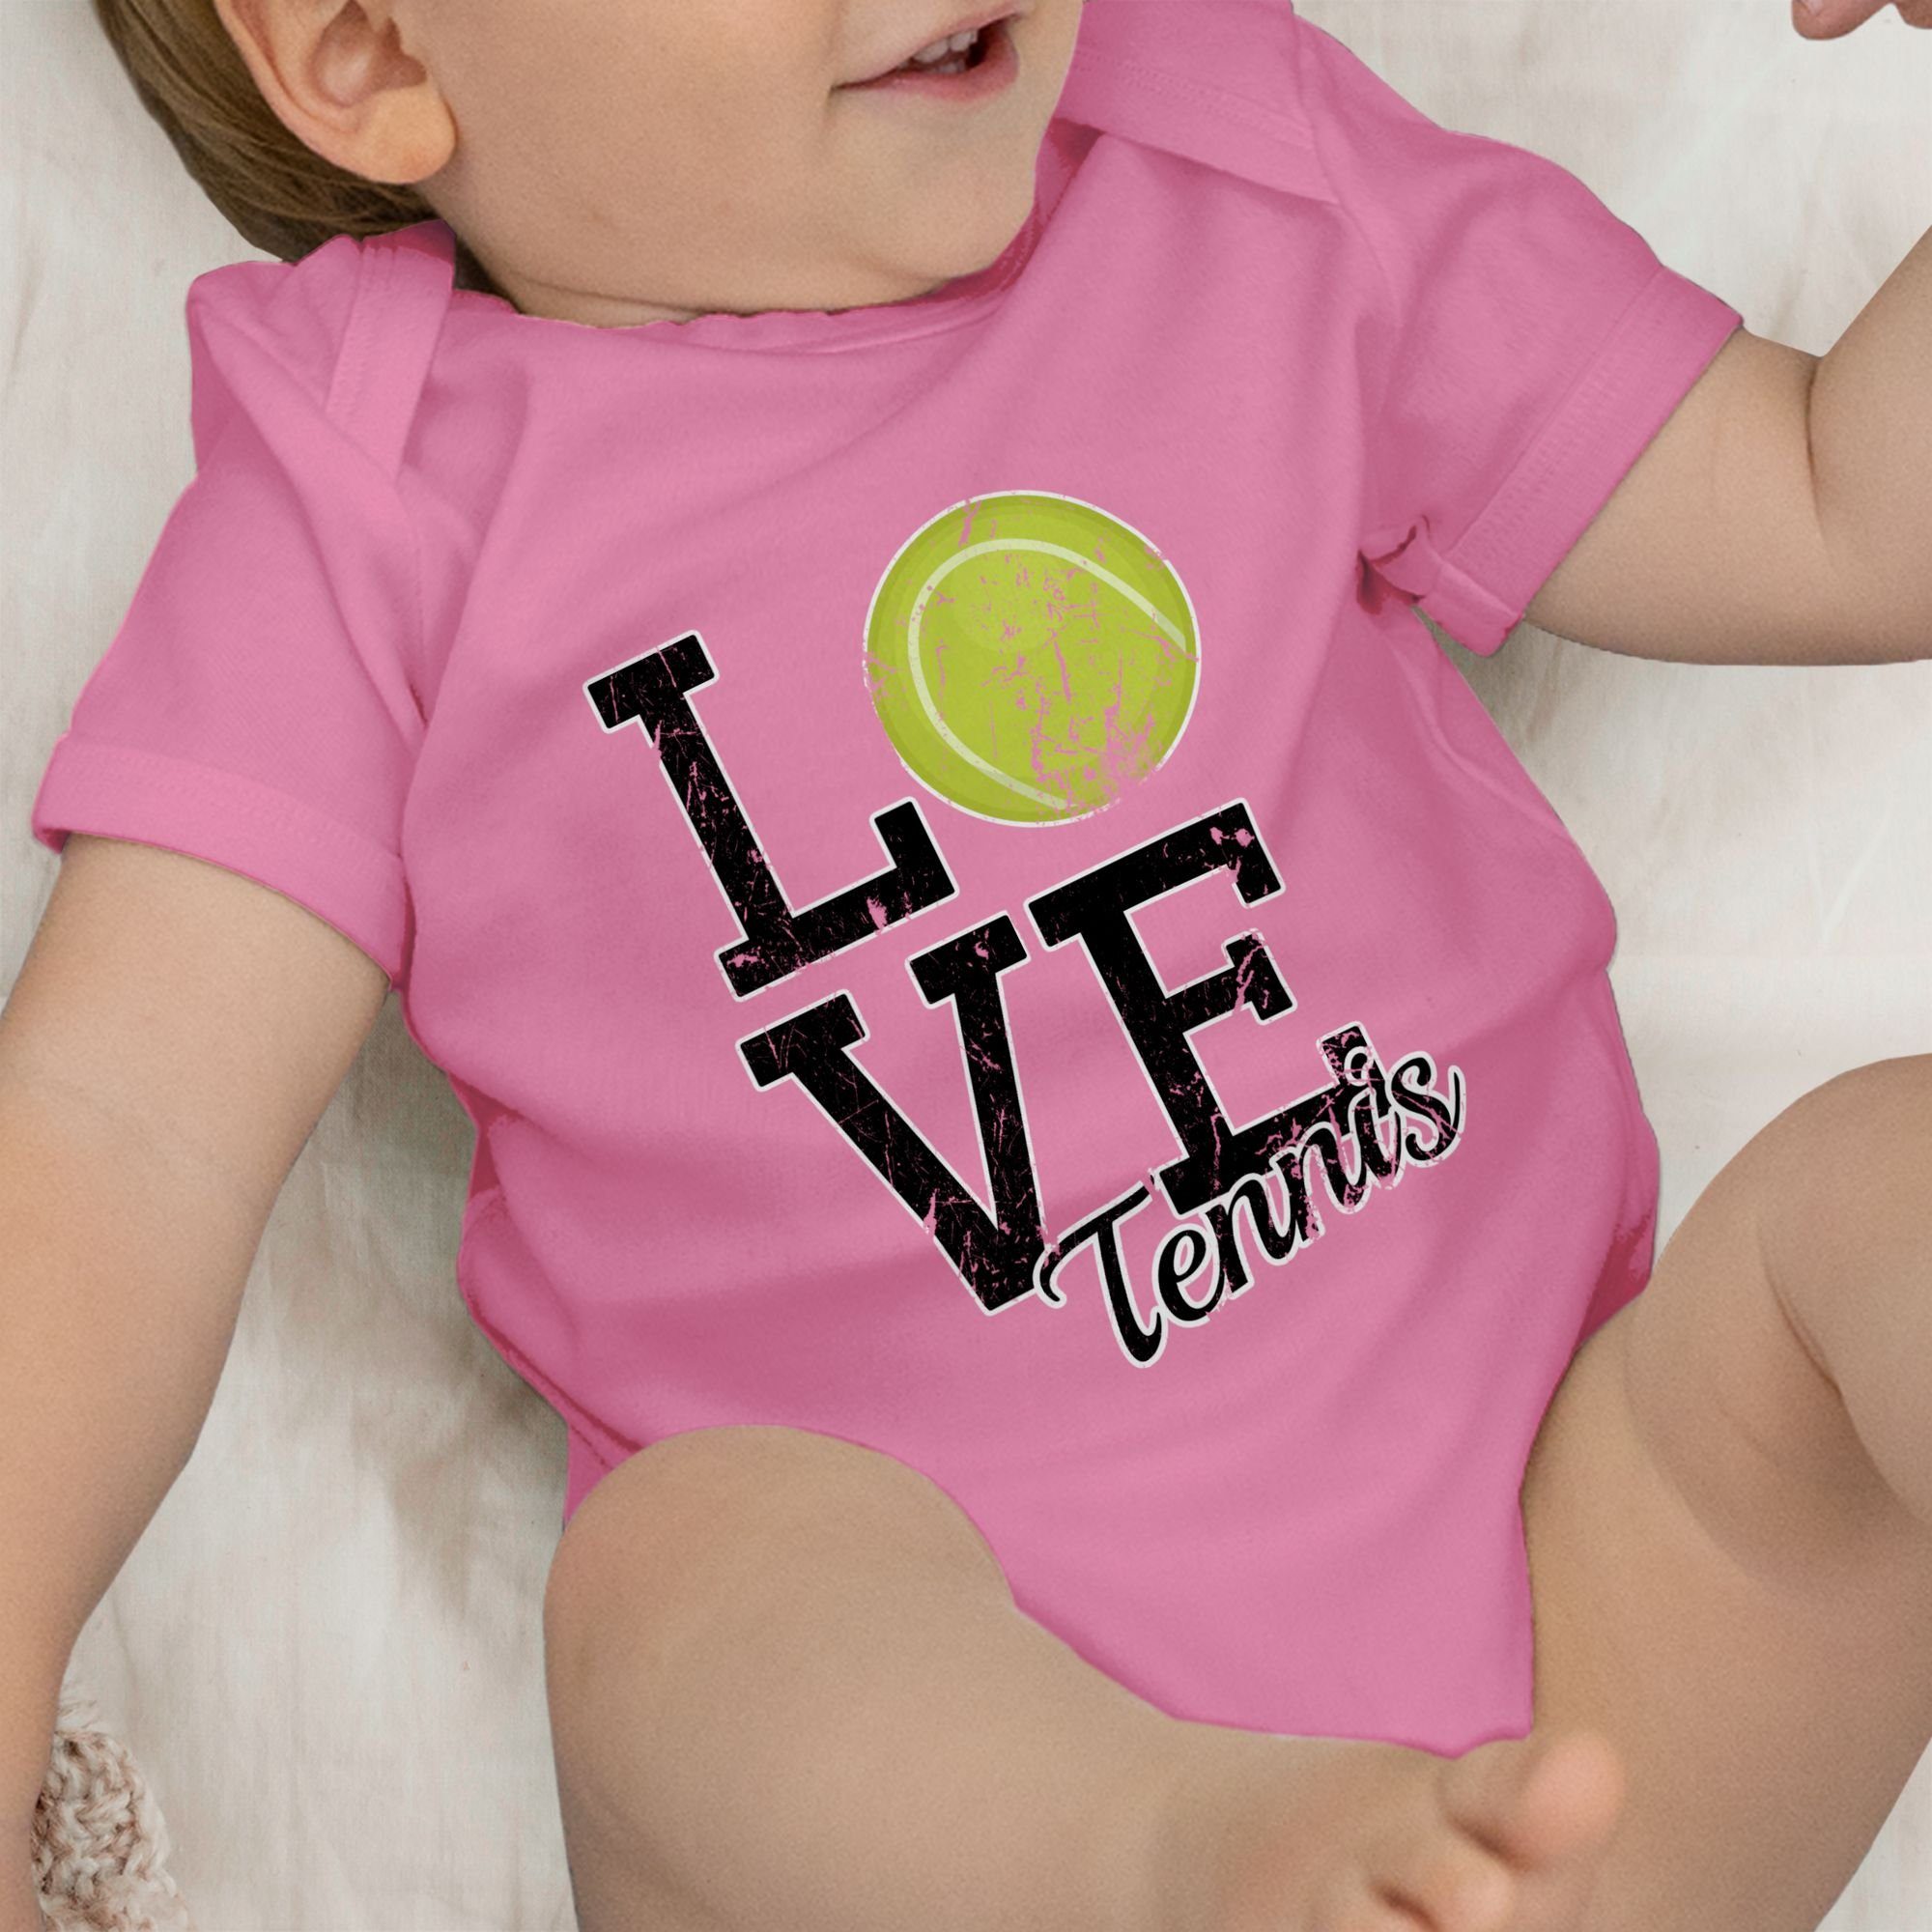 Baby Sport & Shirtbody Shirtracer Tennis Love Pink 1 Bewegung